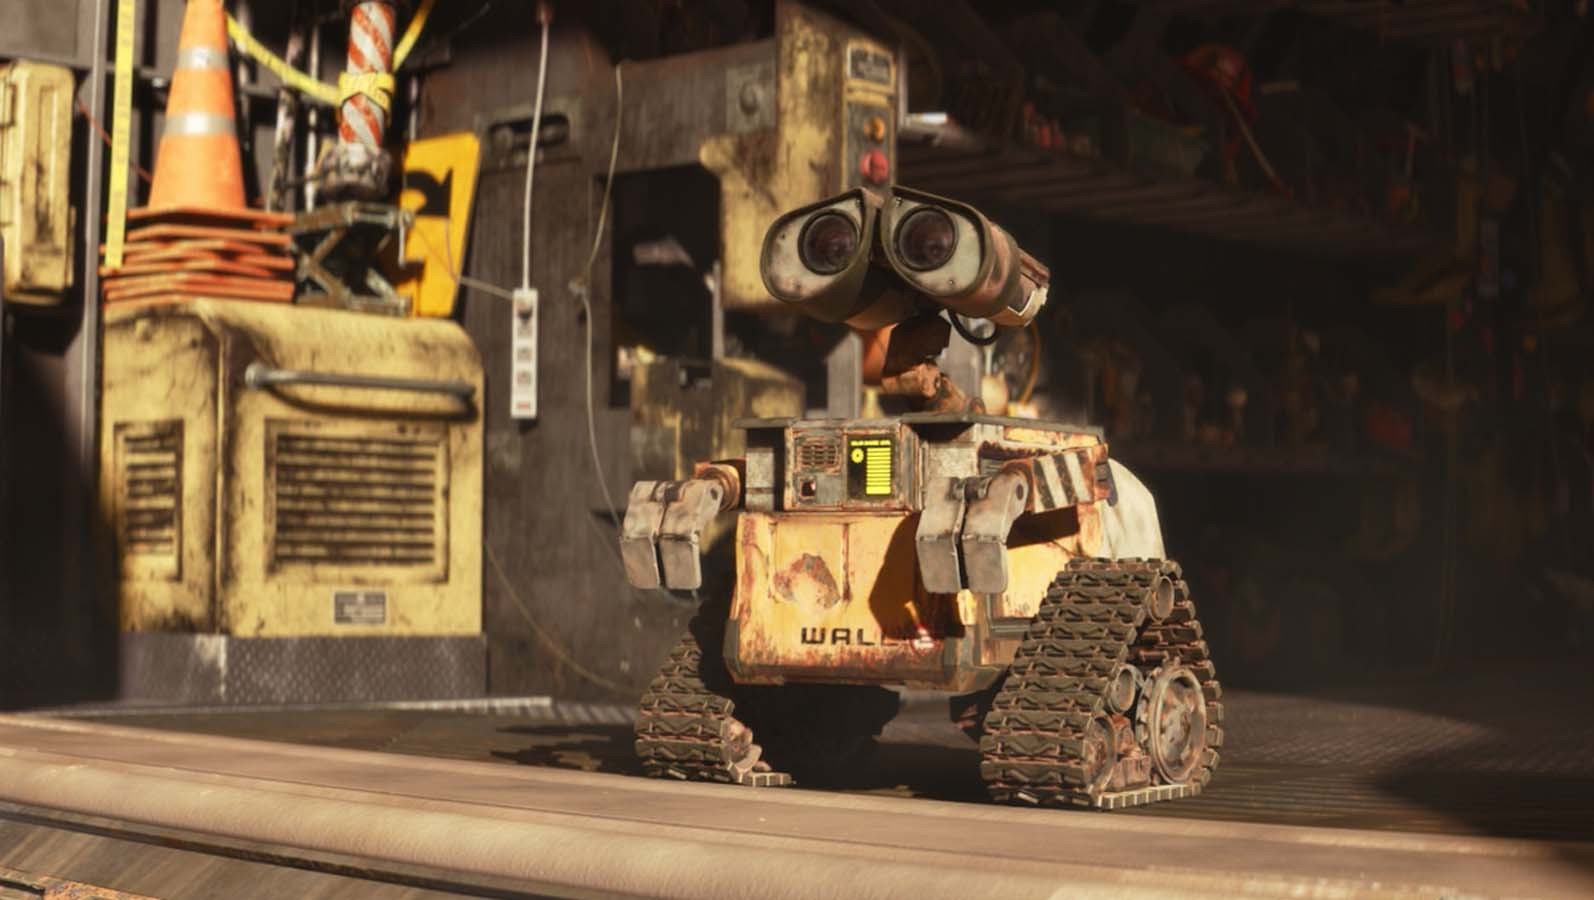 General 1594x900 WALL-E movies animated movies robot Pixar Animation Studios film stills